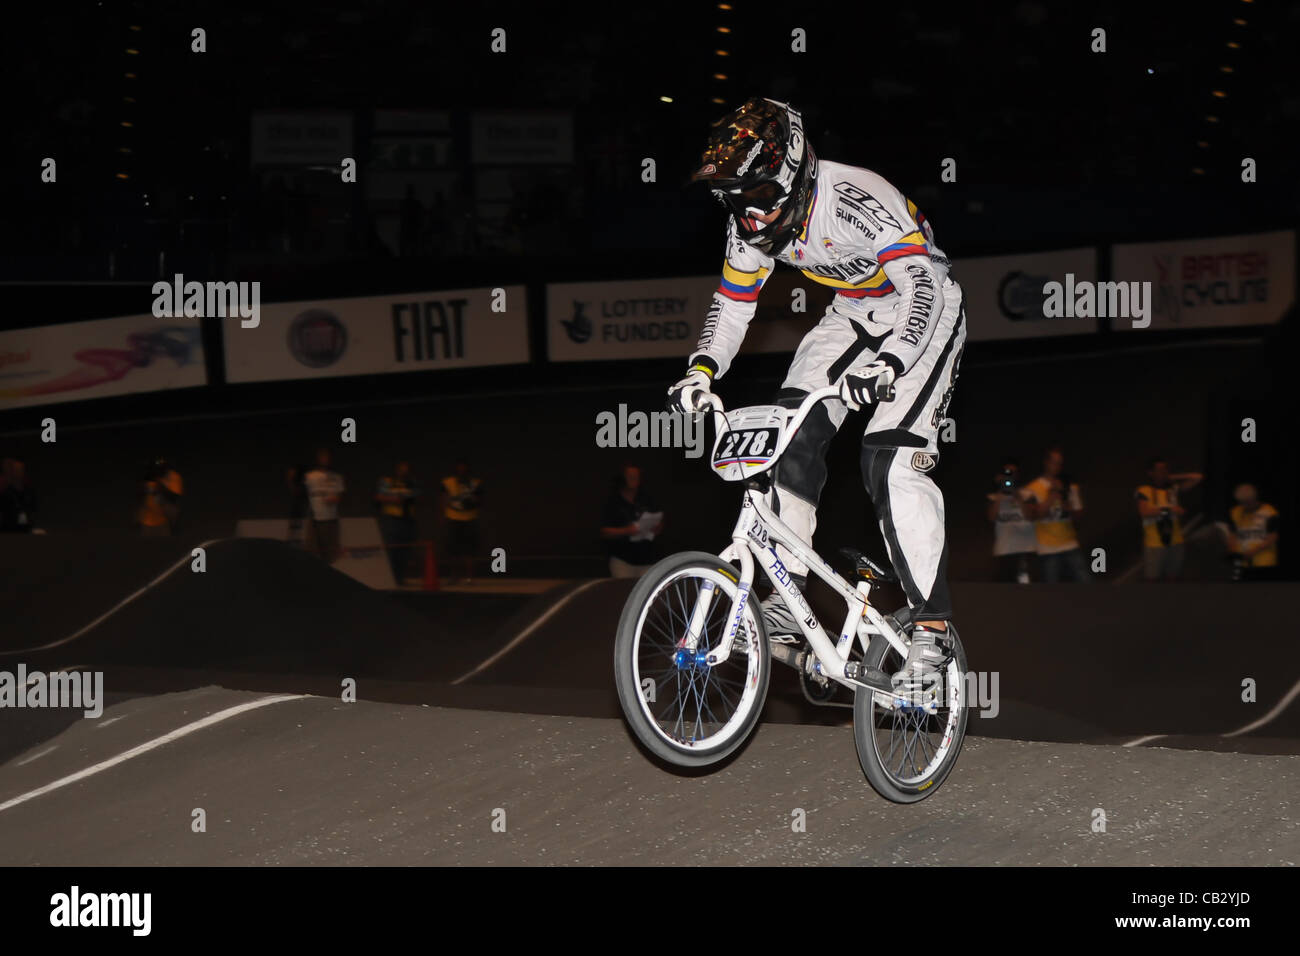 26.05.2012.  England, Birmingham, National Indoor Arena. UCI BMX World Championships. David Alfonso GRANADO LOPERA (Colombia) in action. Stock Photo